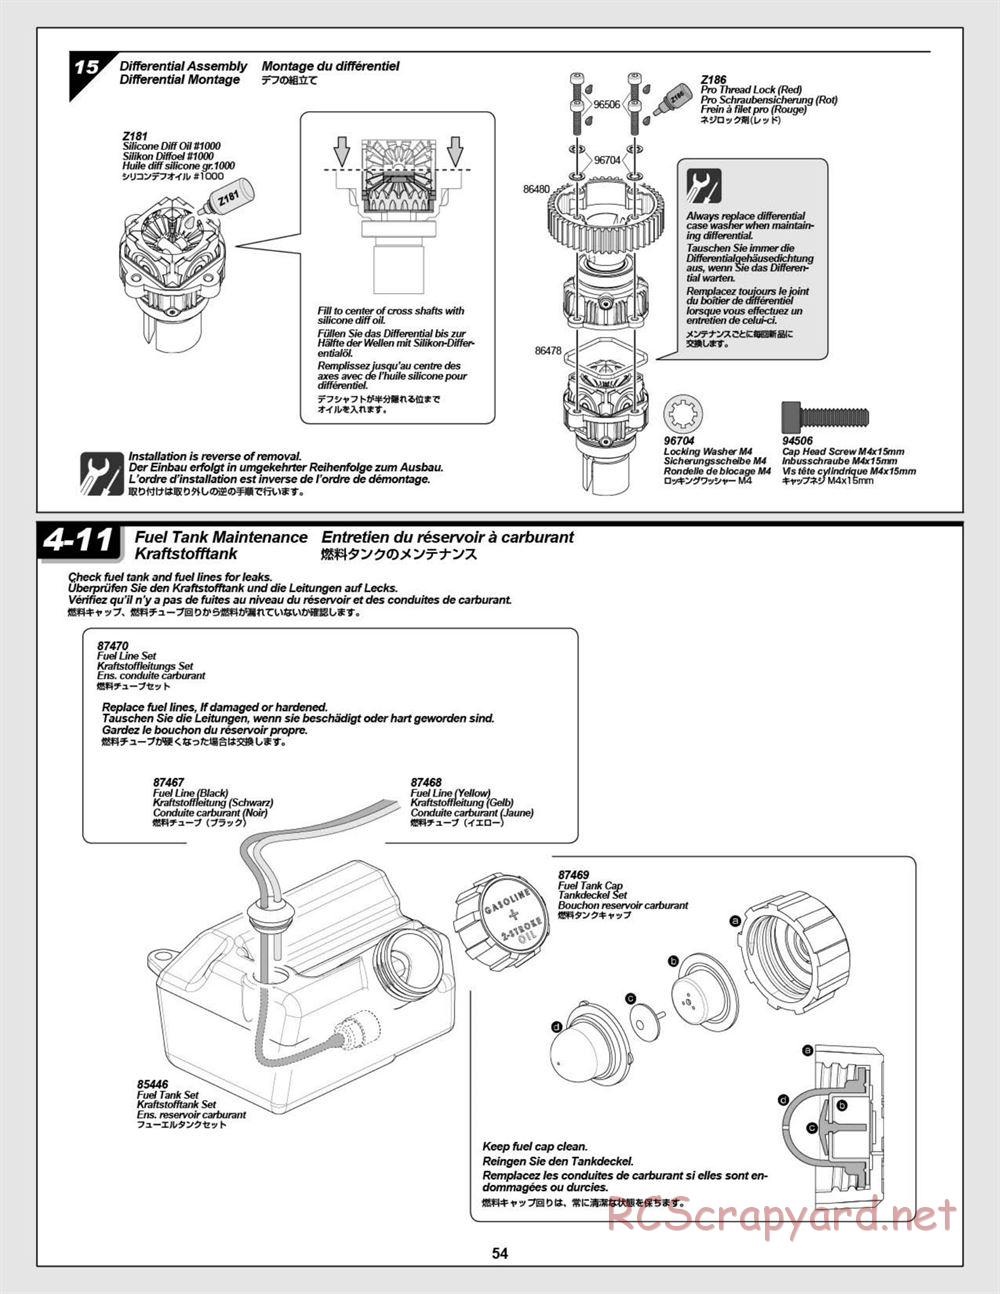 HPI - Baja 5R - Manual - Page 54